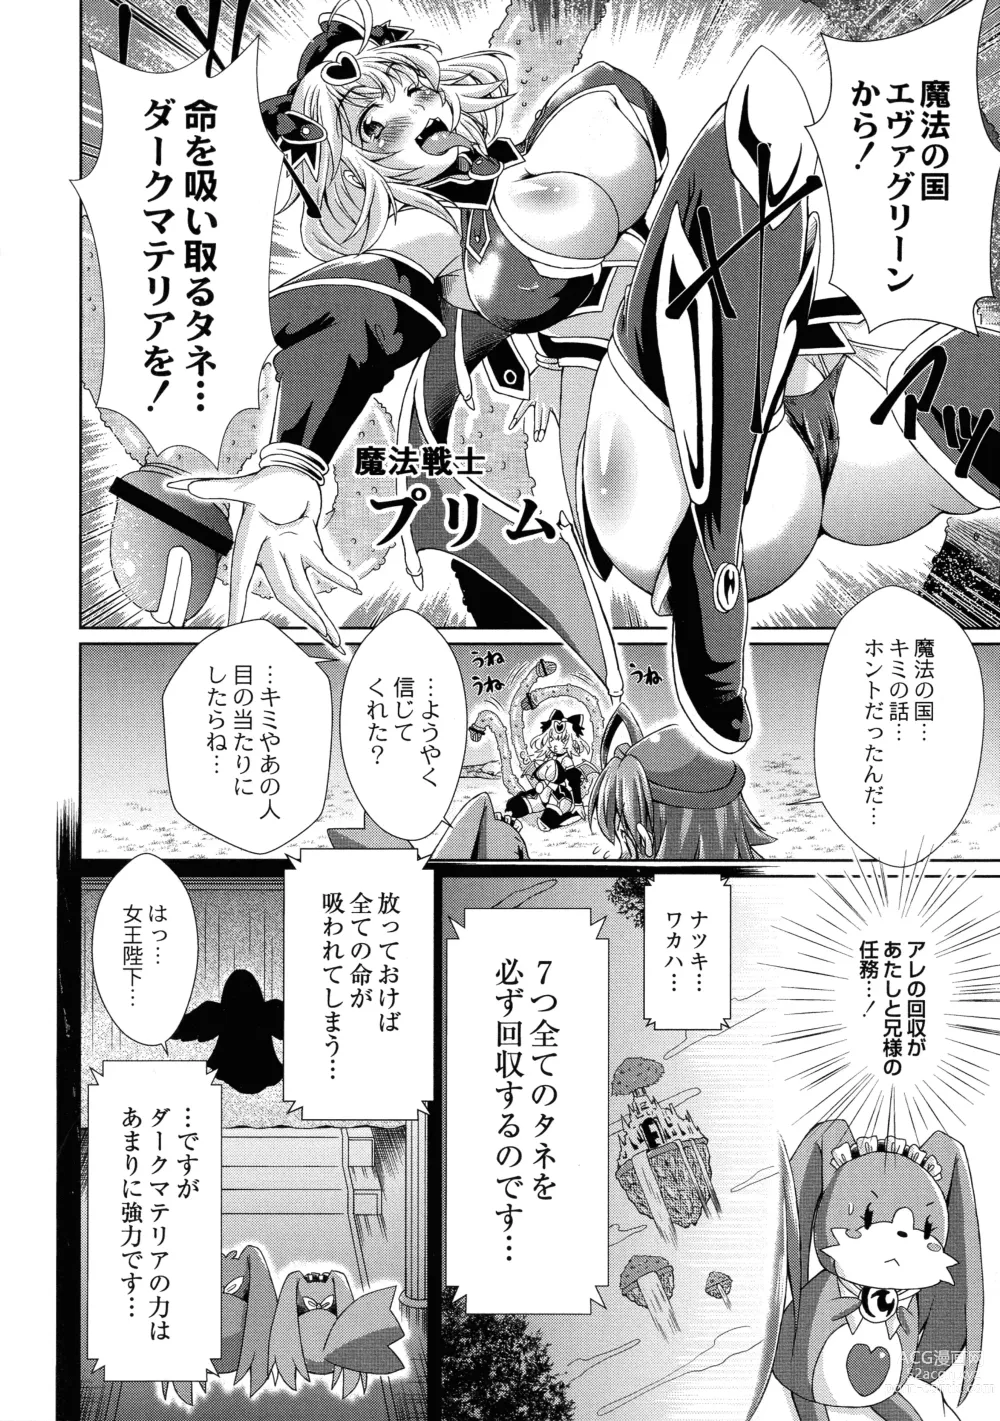 Page 8 of manga Magical Canaan Reboot